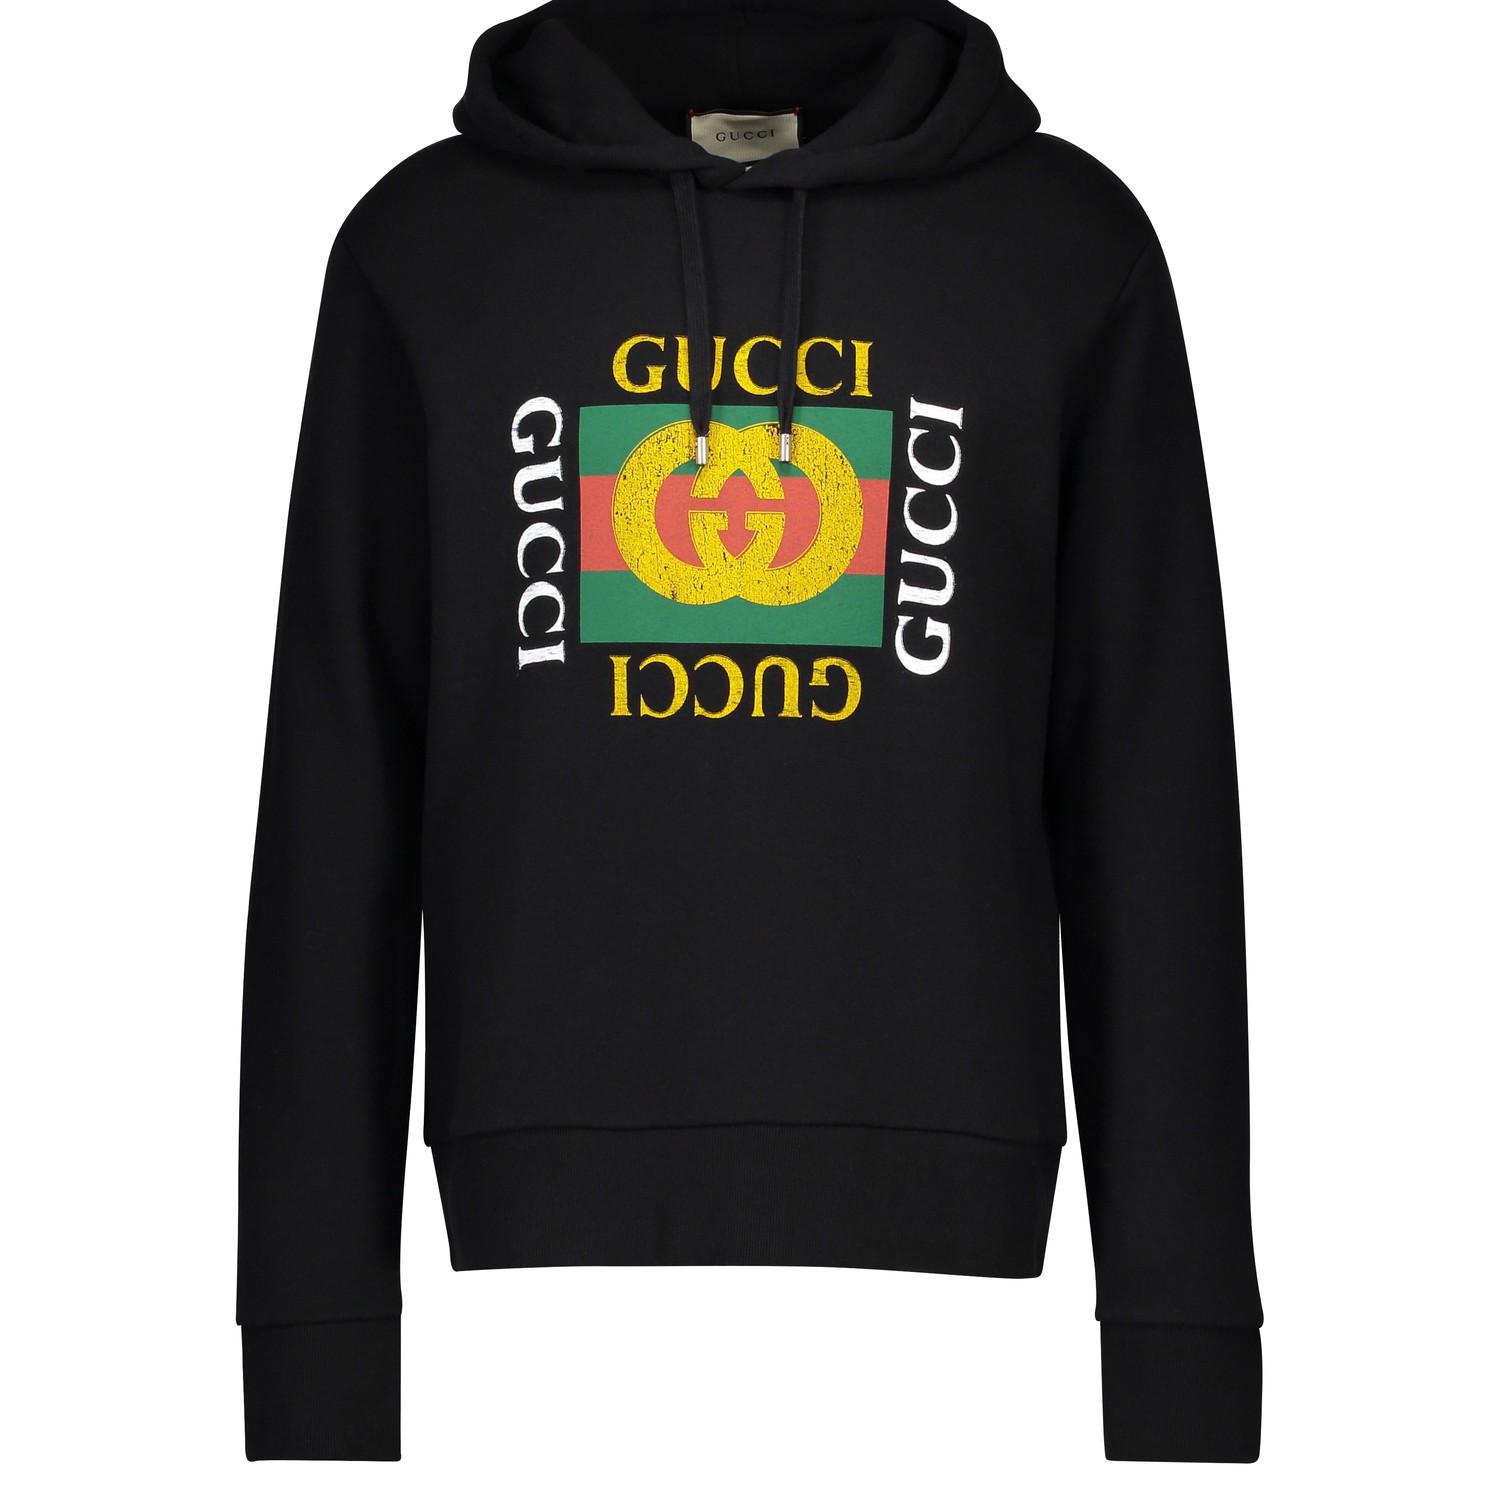 Gucci Logo Oversize Sweatshirt in Black for Men - Lyst